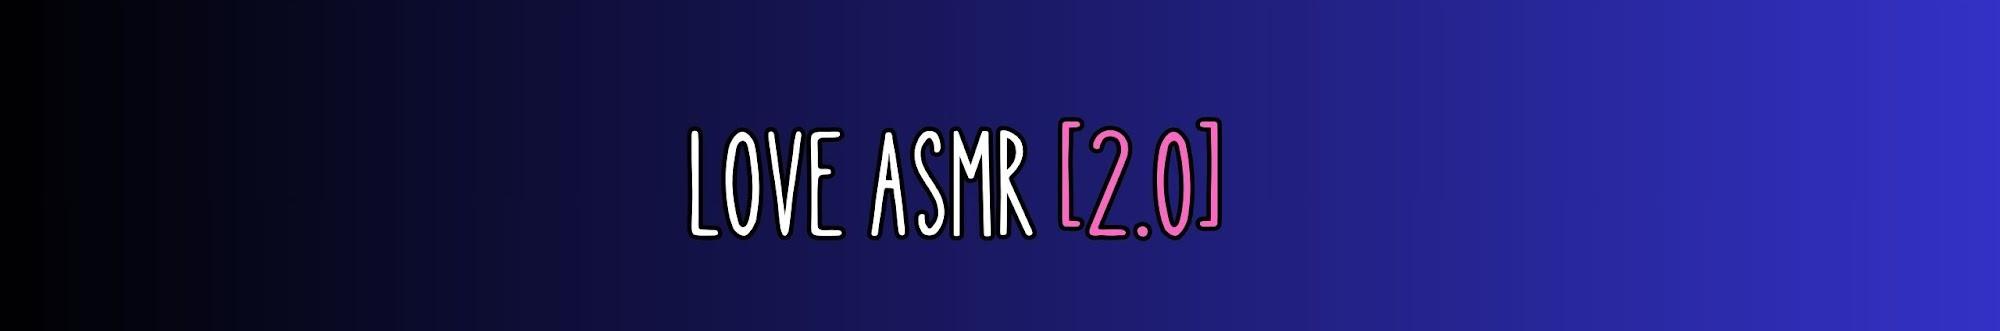 Love ASMR 2.0